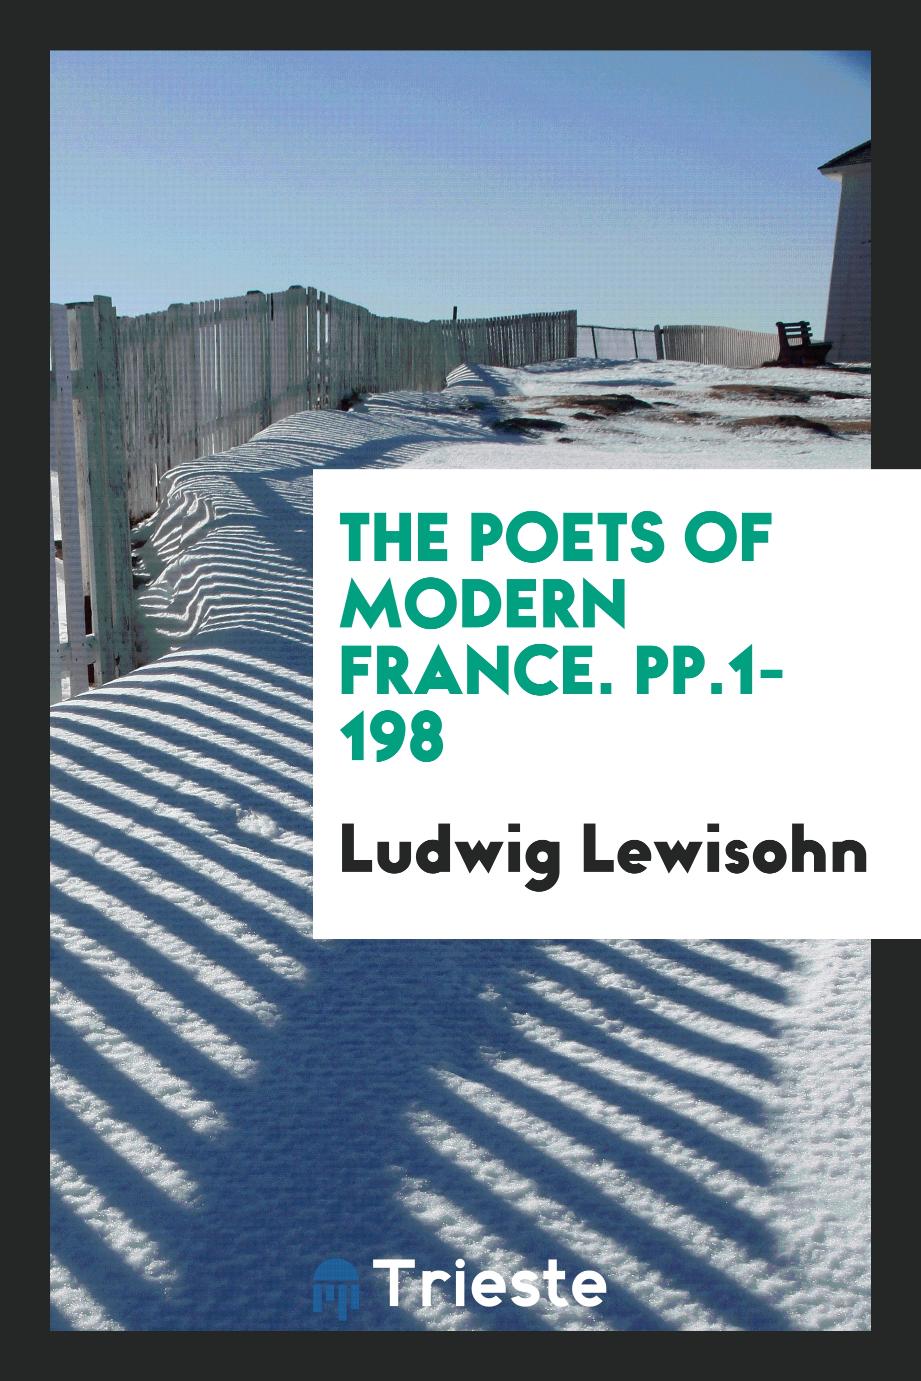 The Poets of Modern France. pp.1-198